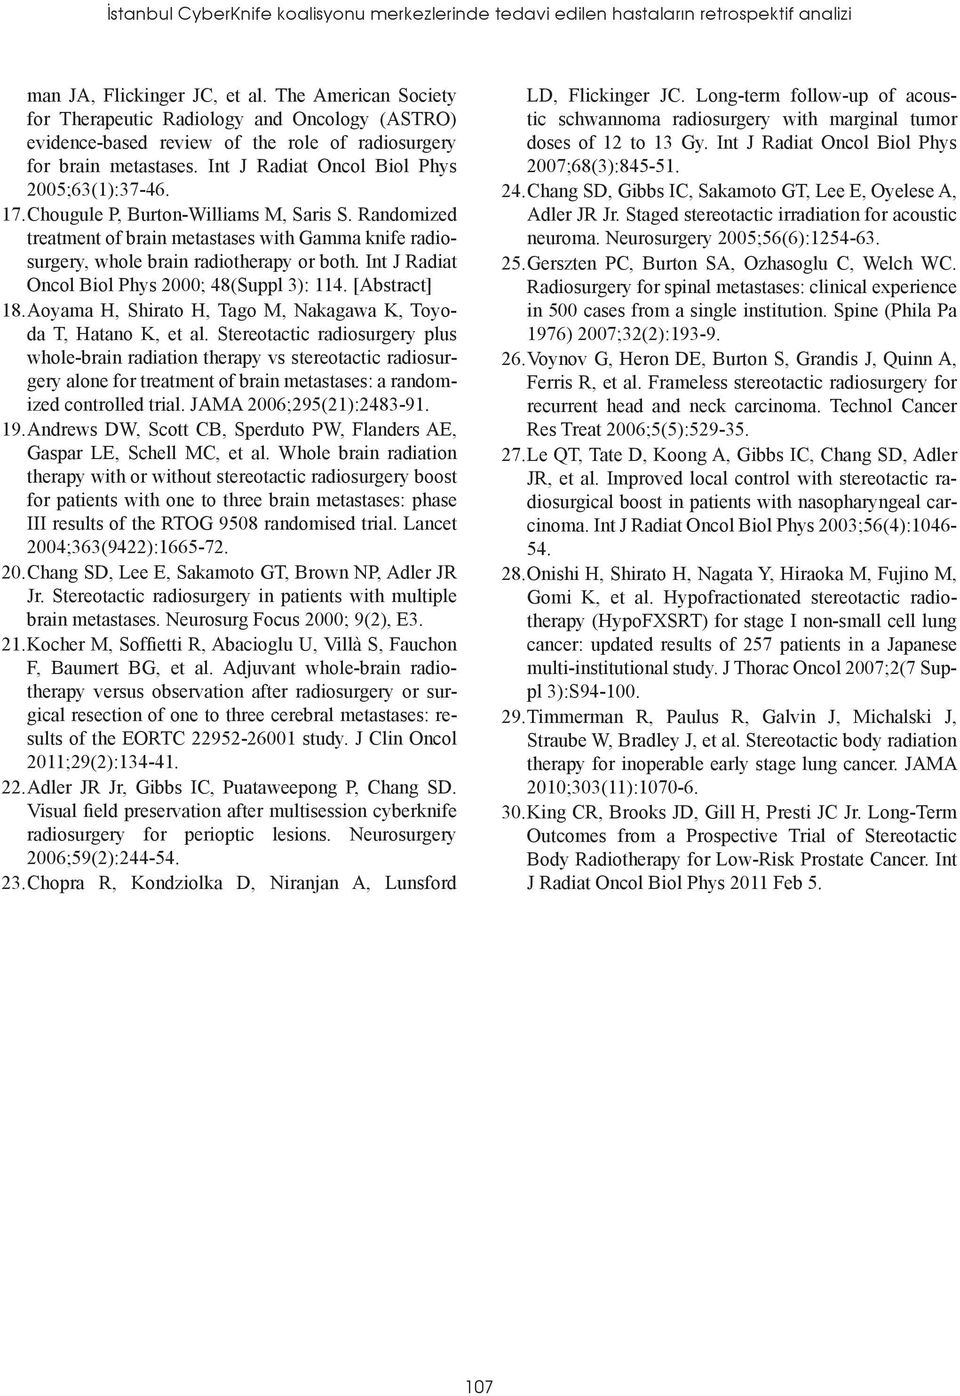 Chougule P, Burton-Williams M, Saris S. Randomized treatment of brain metastases with Gamma knife radiosurgery, whole brain radiotherapy or both. Int J Radiat Oncol Biol Phys 2000; 48(Suppl 3): 114.